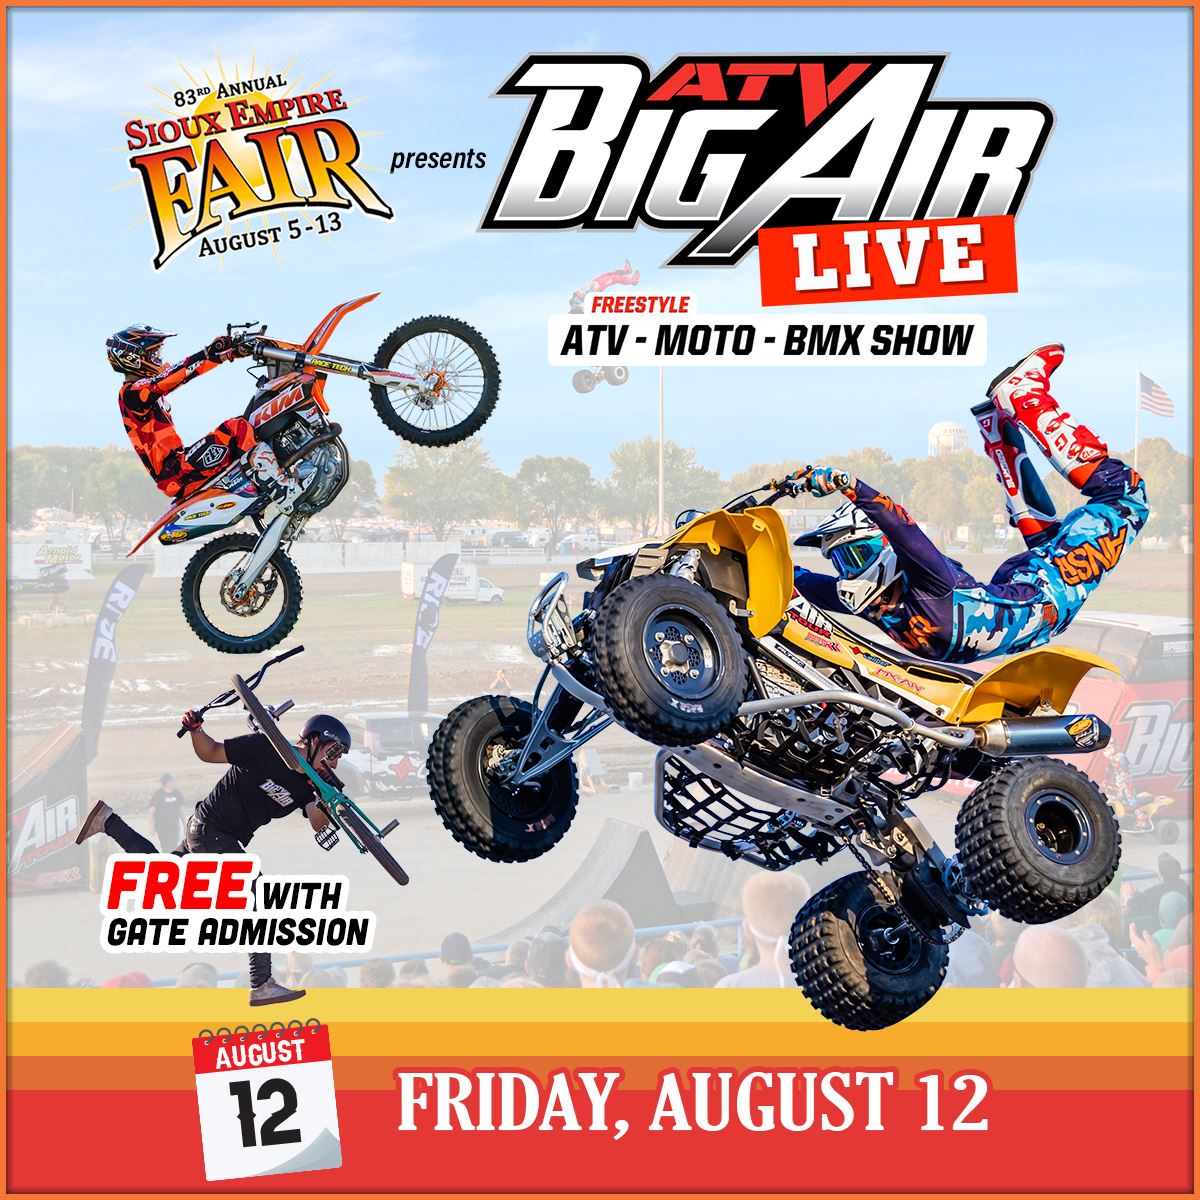 The Sioux Empire Fair is proud to Big Air ATV Tour.